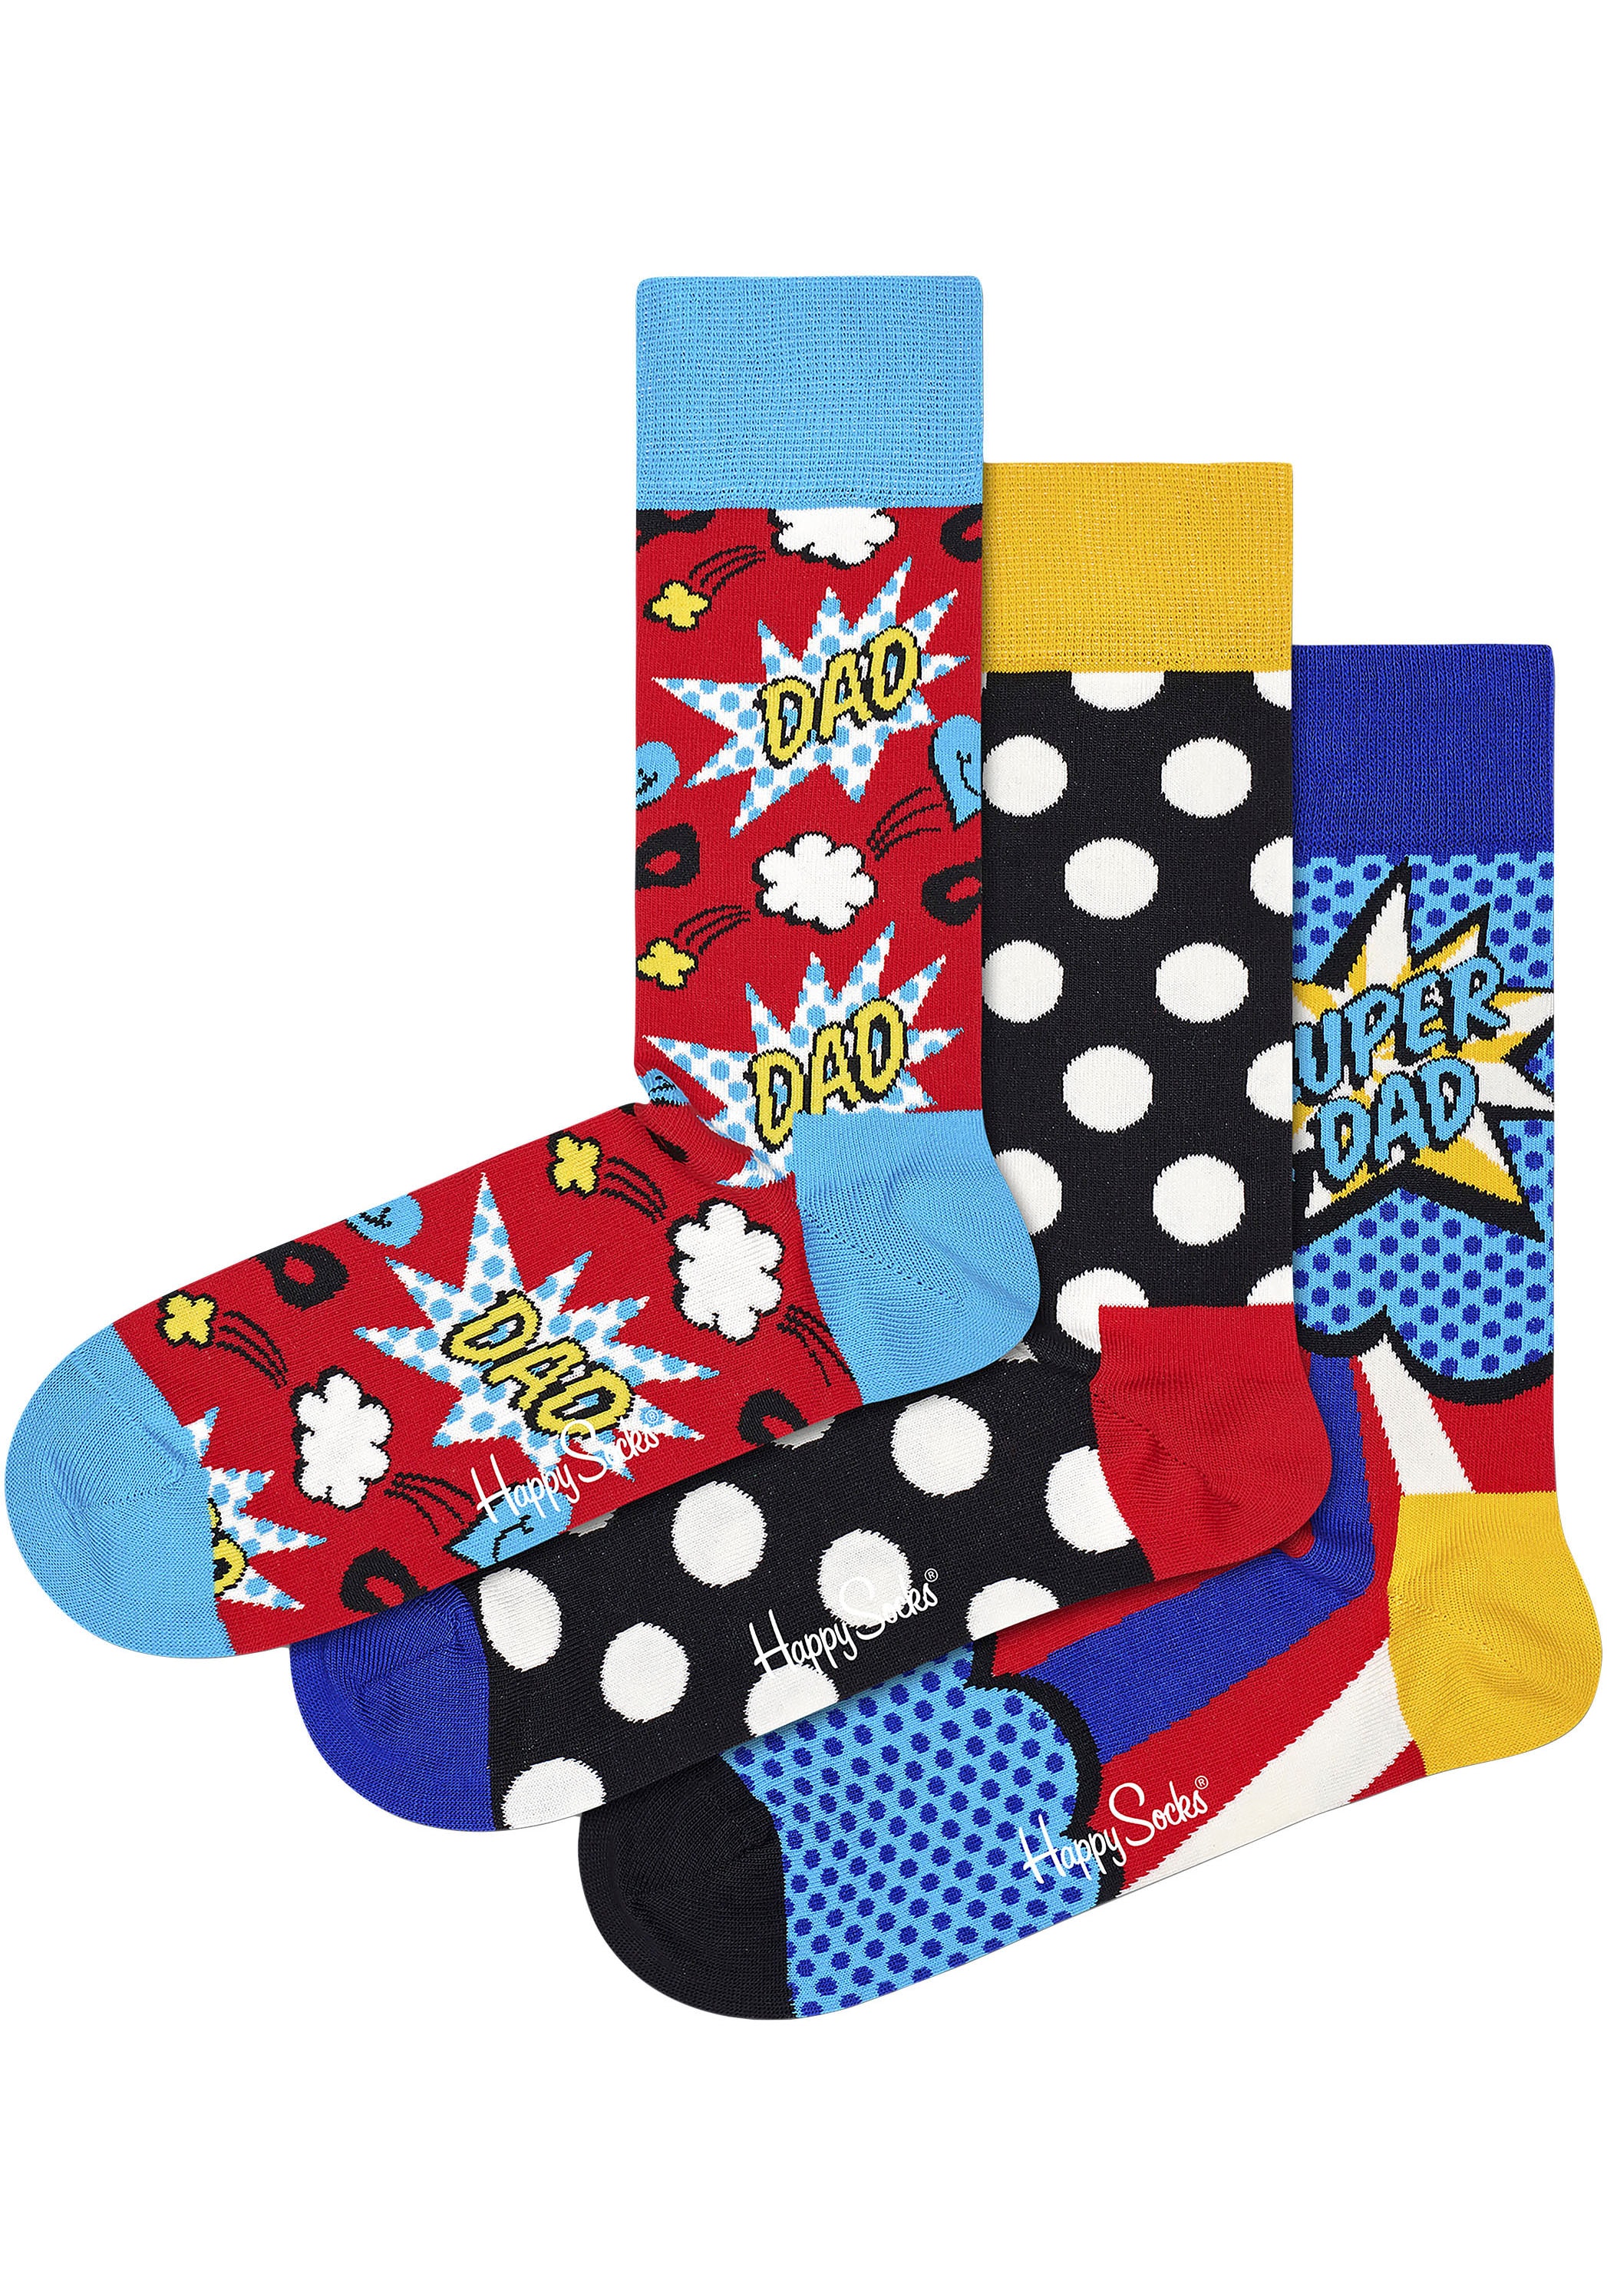 I\'m (Packung, online | Happy Dad Socks Paar), Super Set kaufen walking Gift Socken, 3